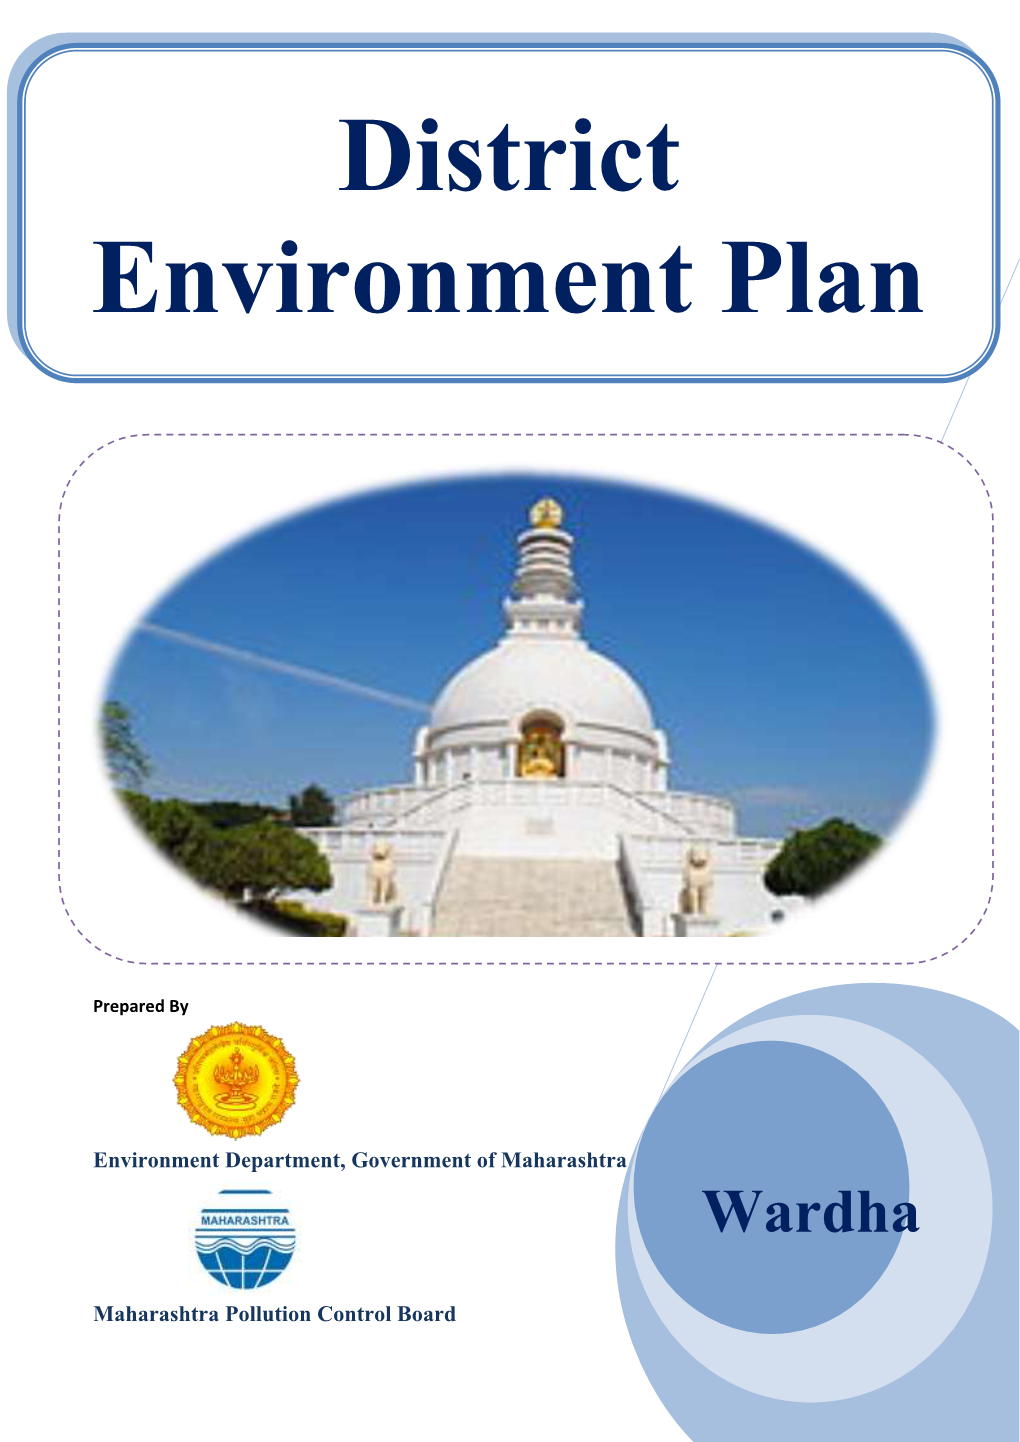 District Environment Plan: Wardha